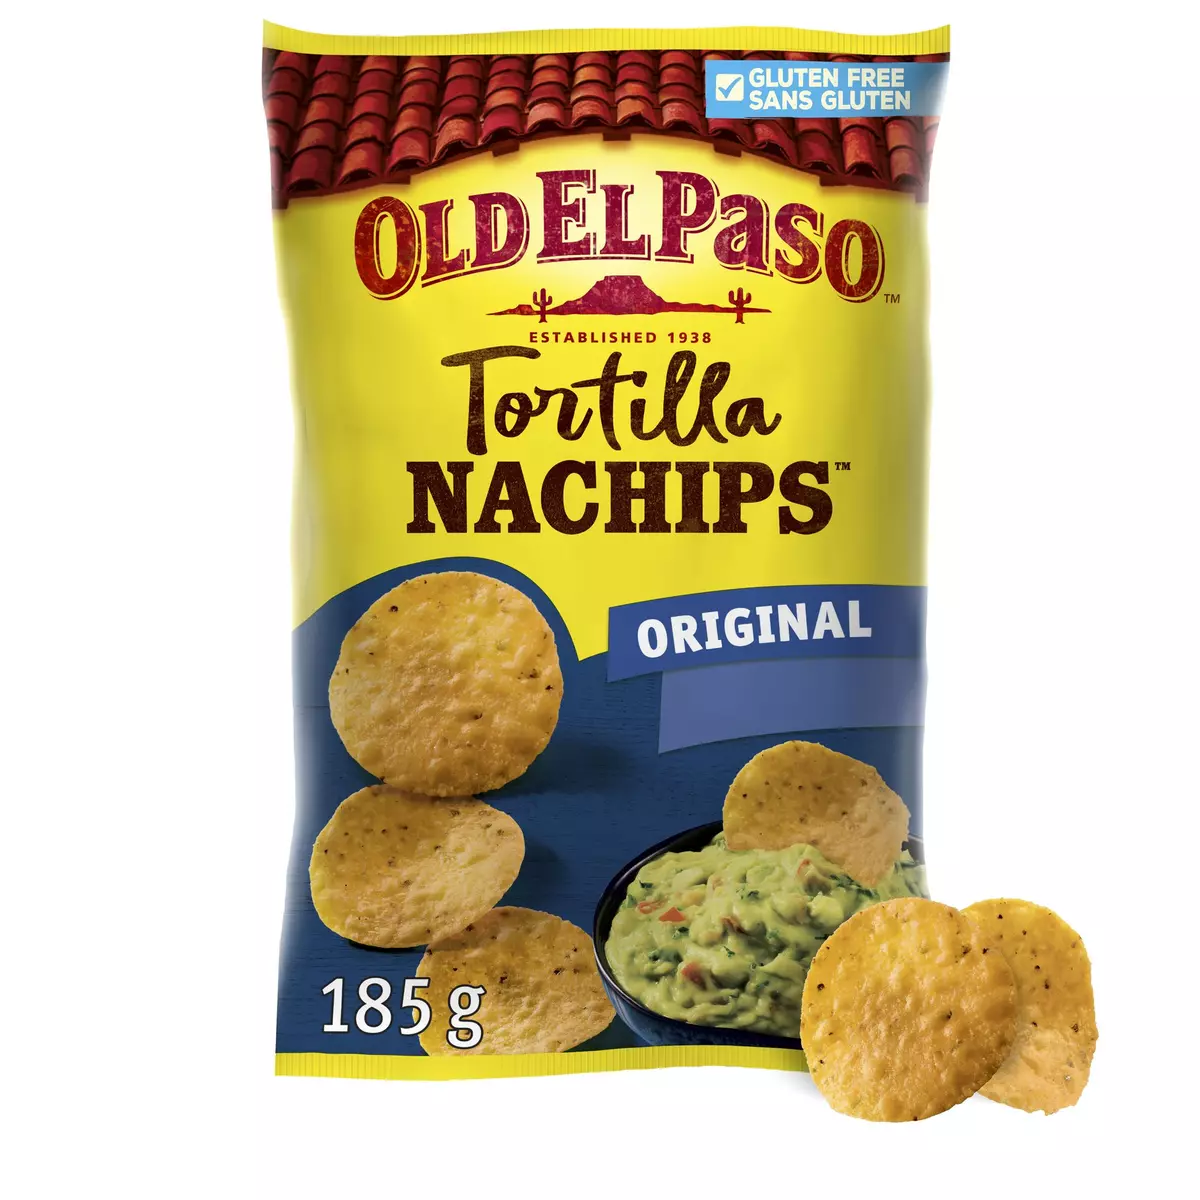 OLD EL PASO Tortilla nachips original sans gluten 185g